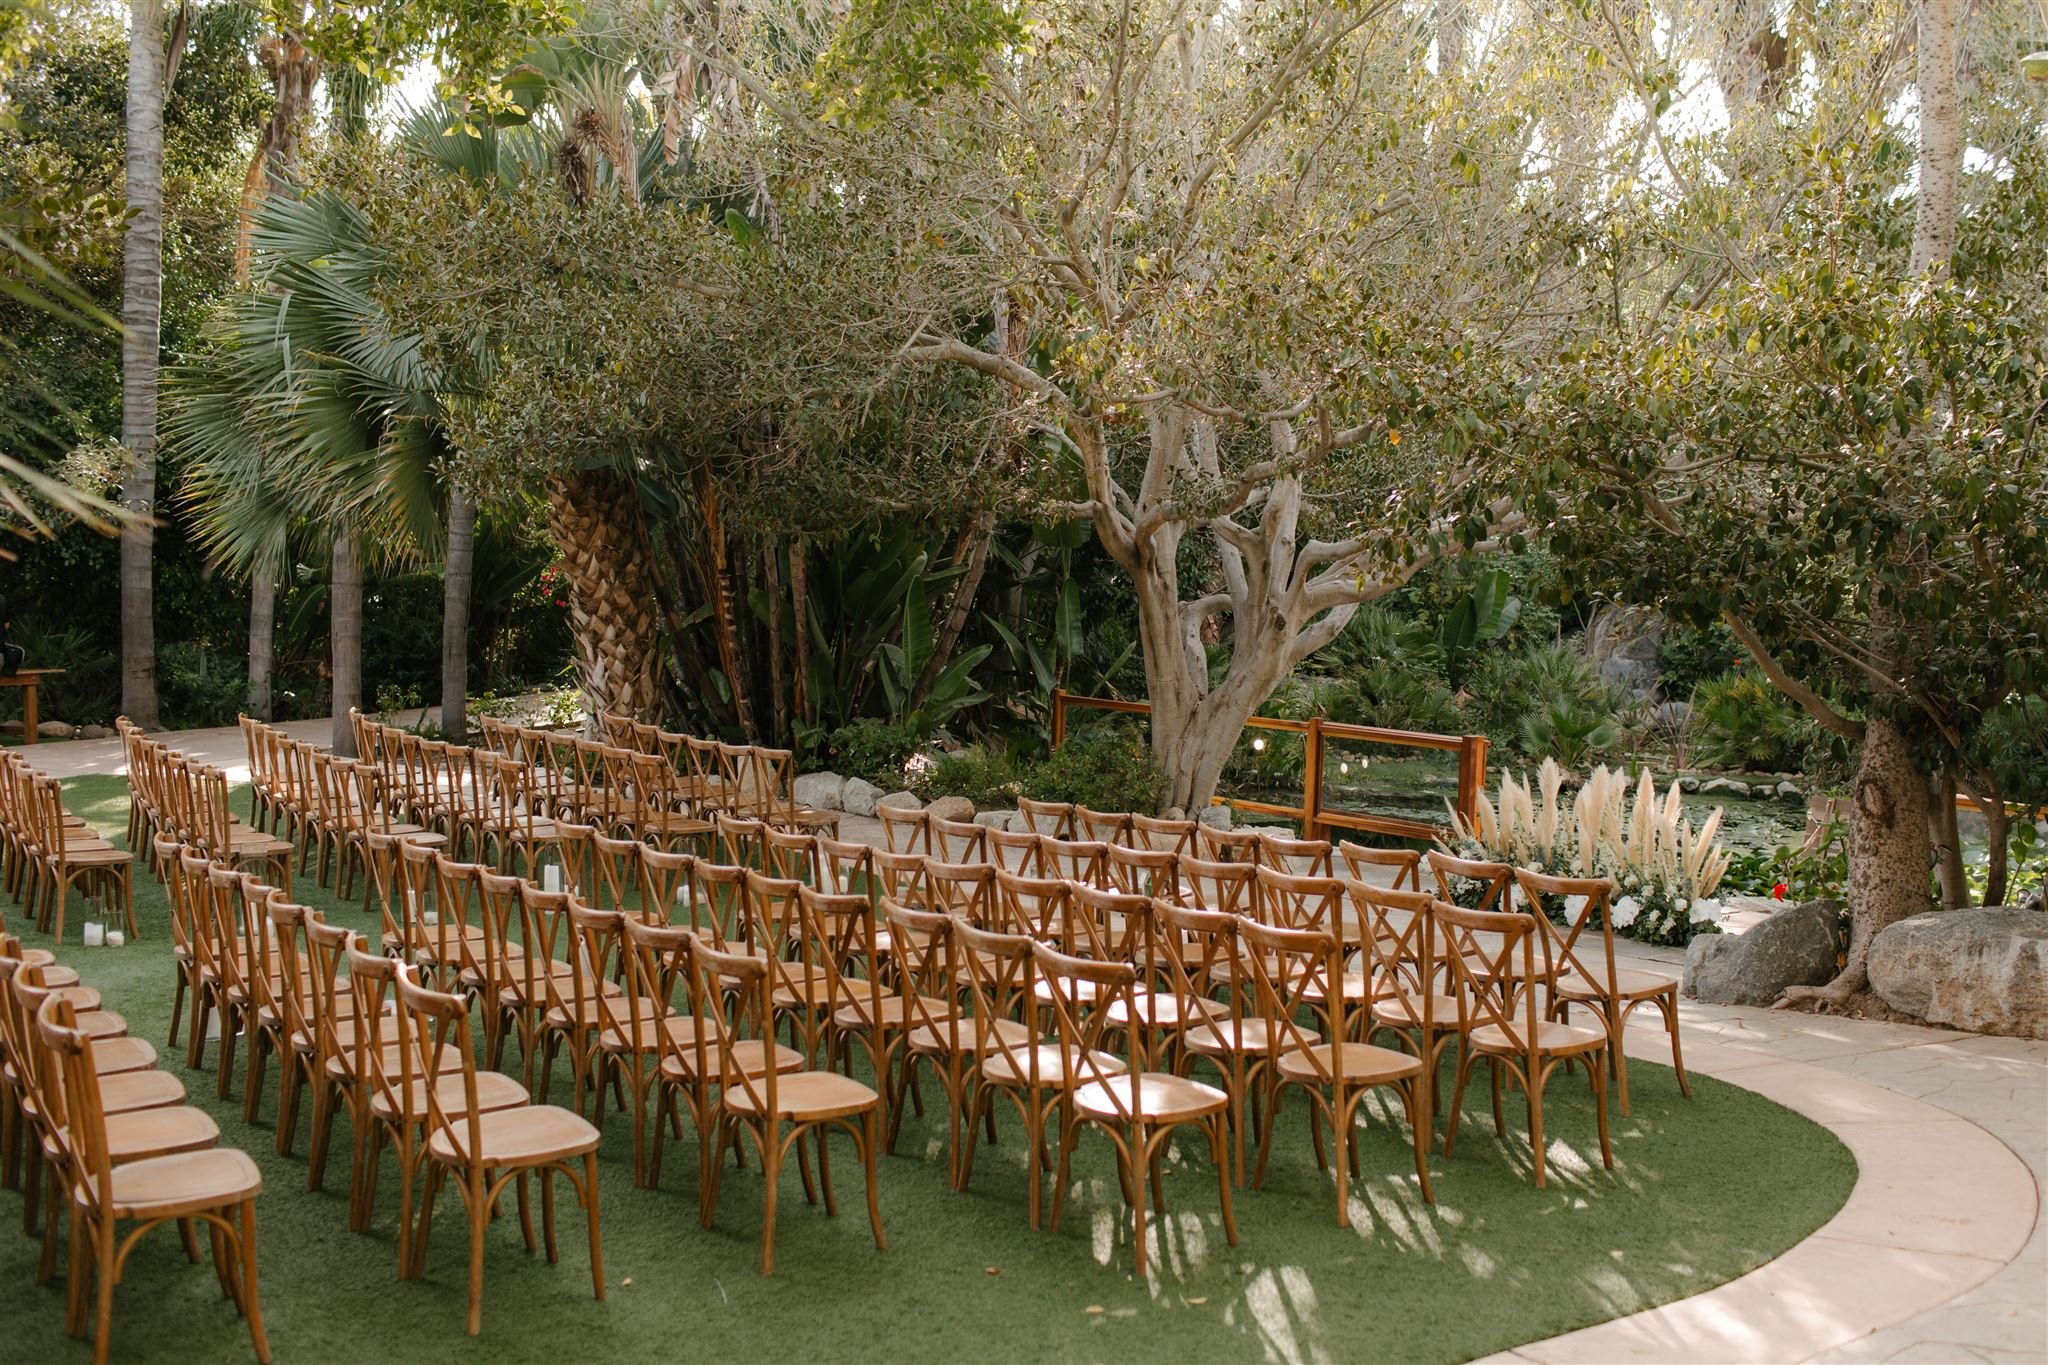 southern-california-wedding-venue-socal-garden-lush-greenery-san-diego-venue-palms-botanica-trademark-brown-crossback-chairs